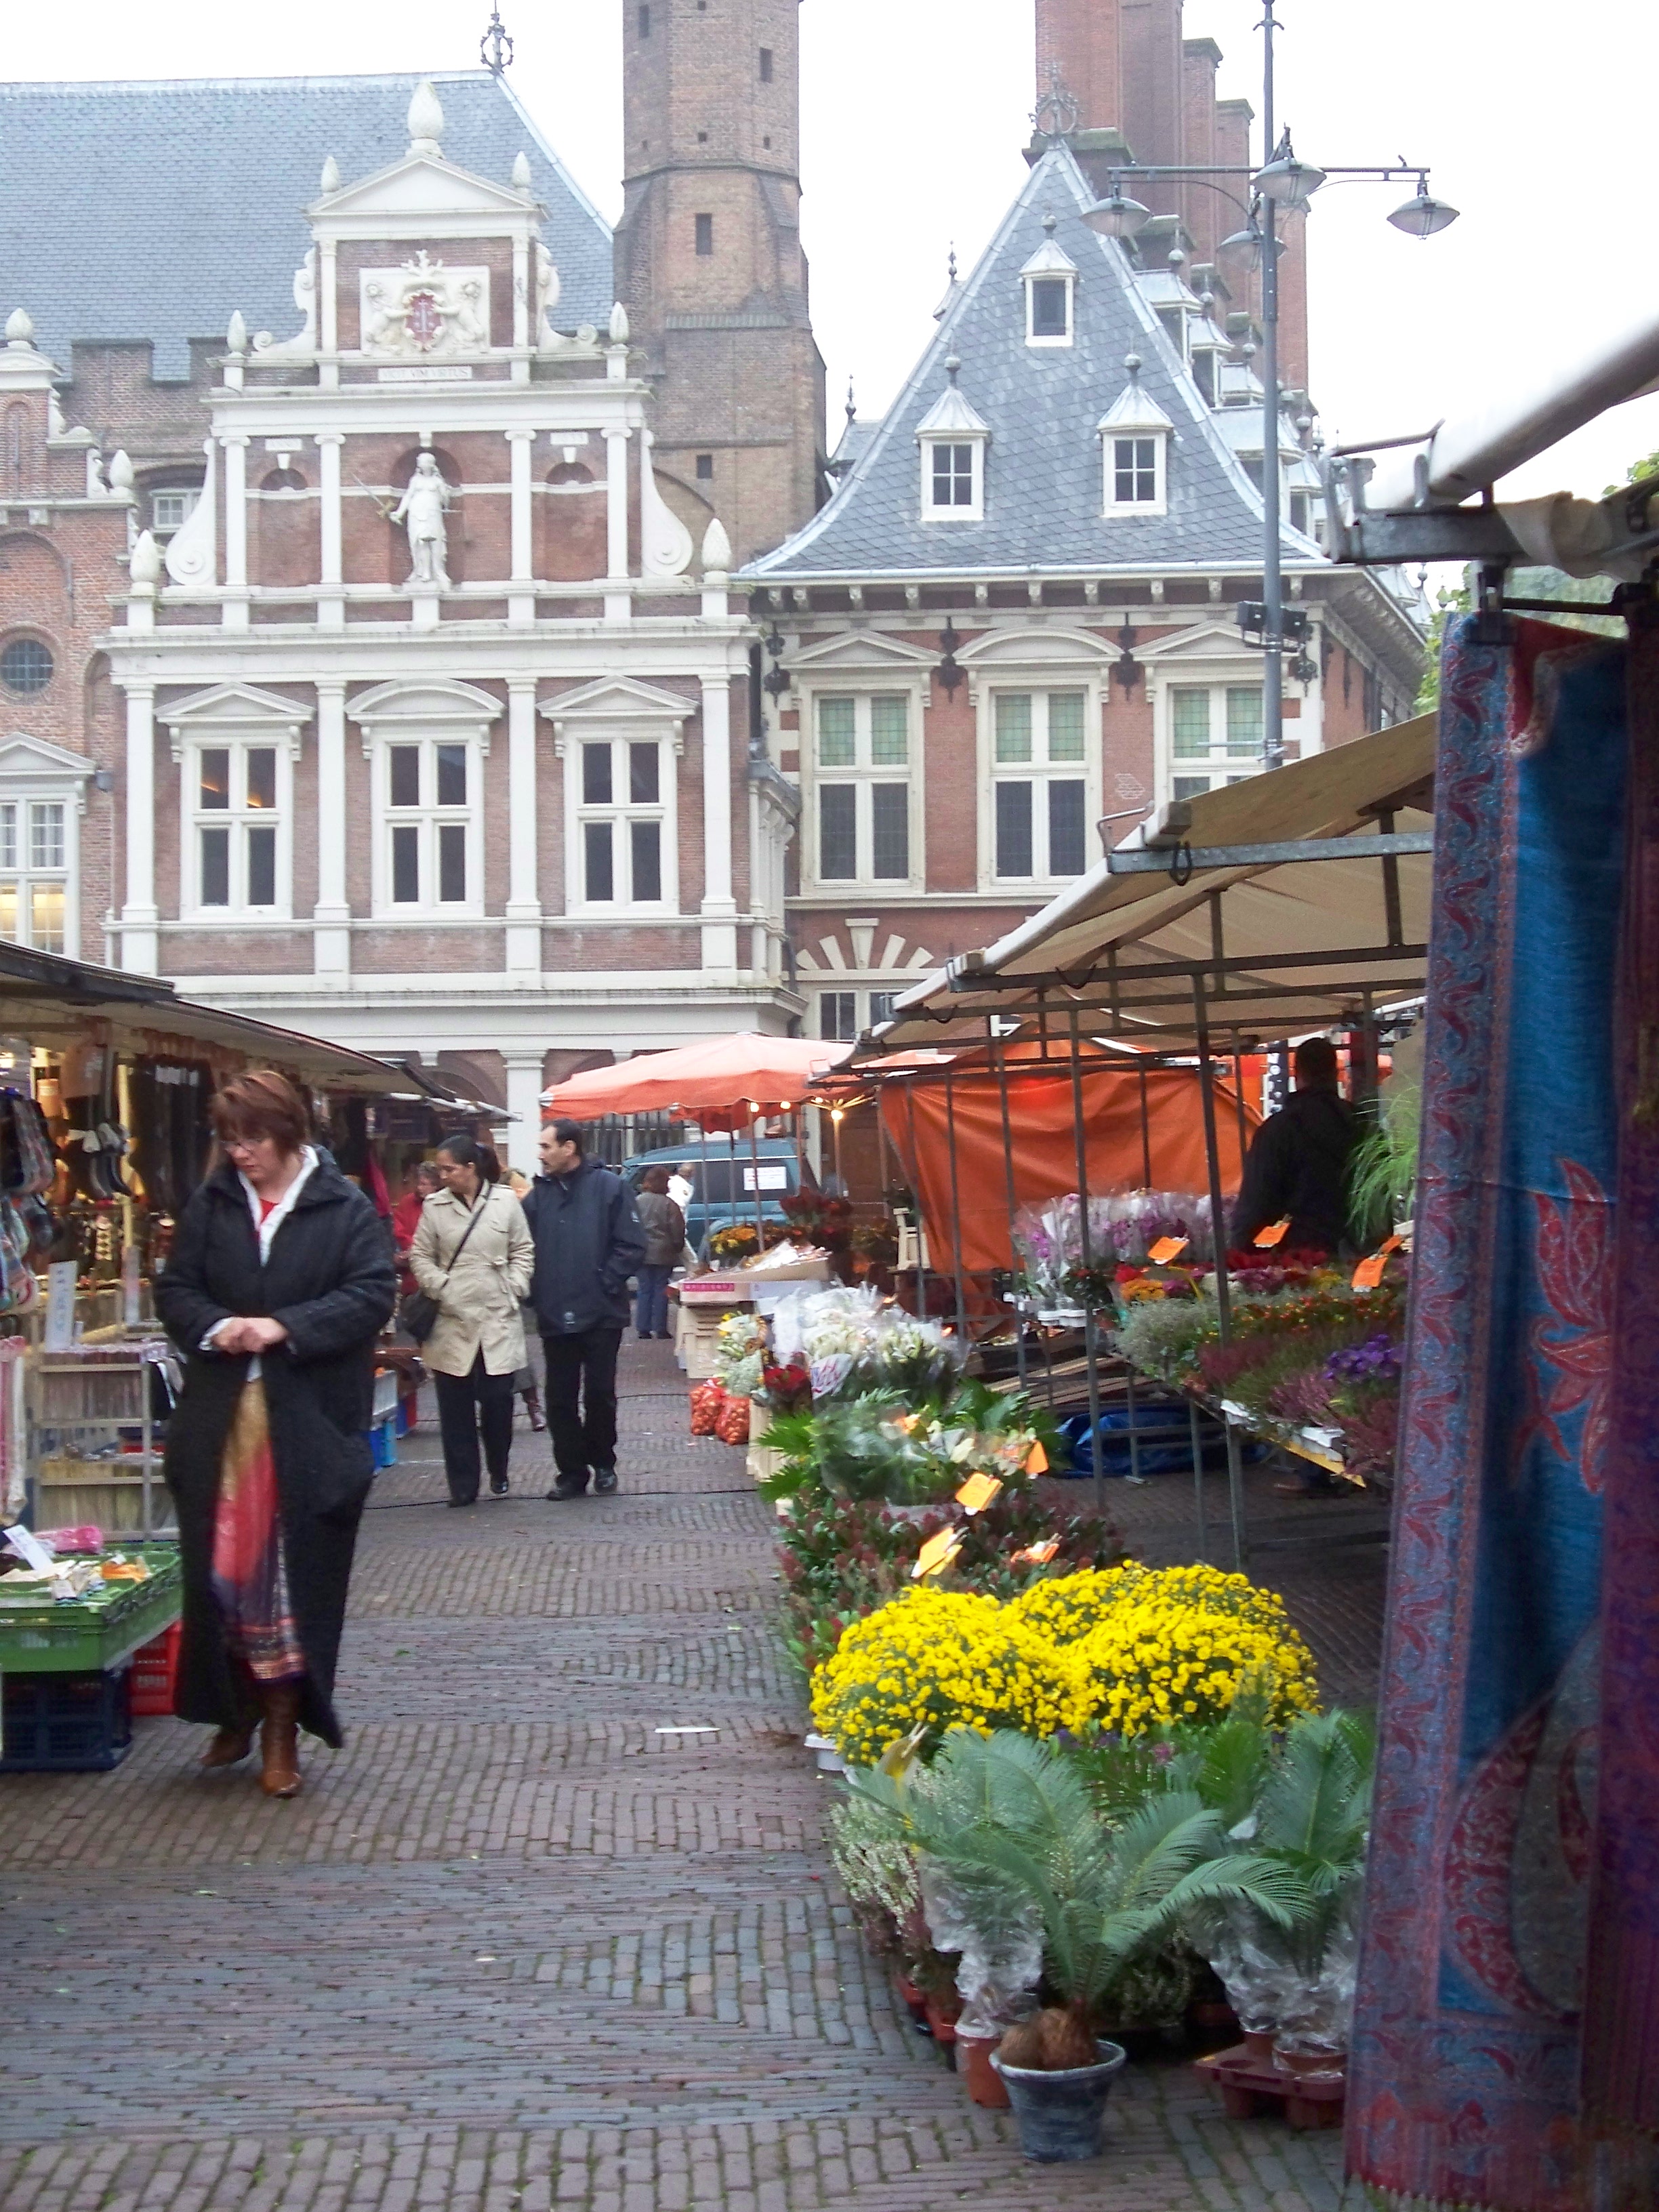 Grote Markt, Haarlem, Holland